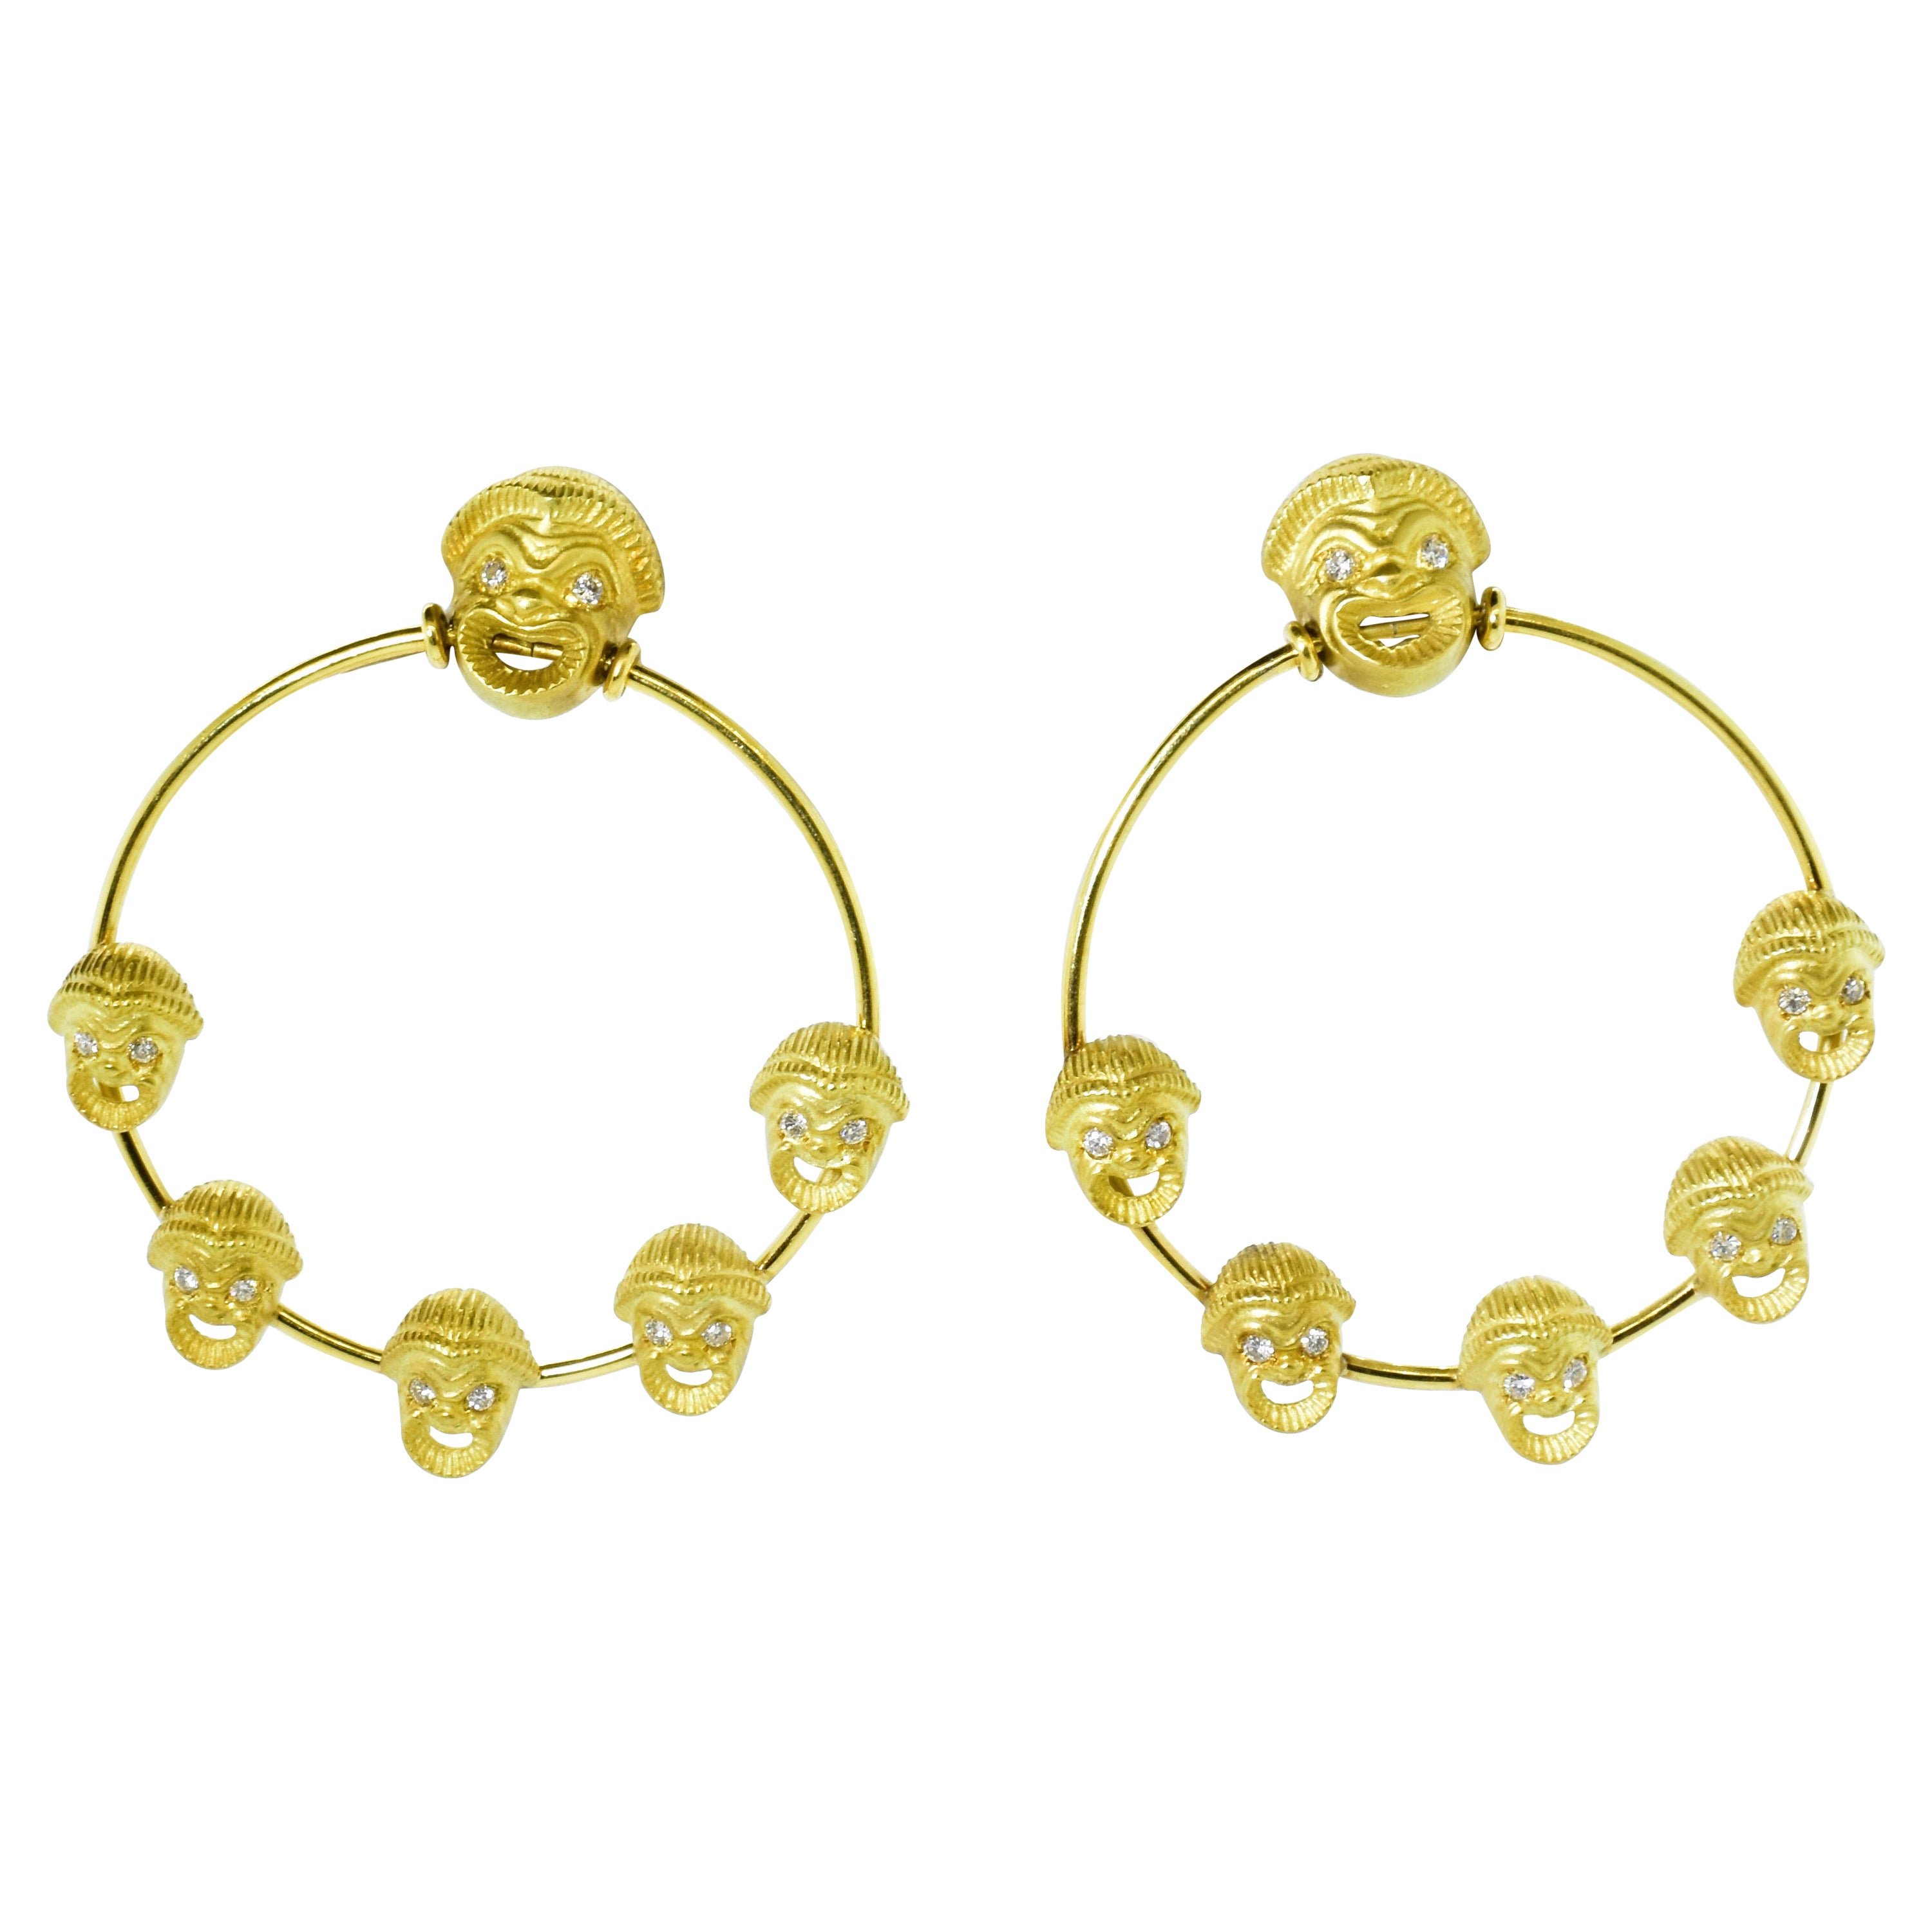 18K Gold and Diamond 'Comedy Mask' Motif Earrings